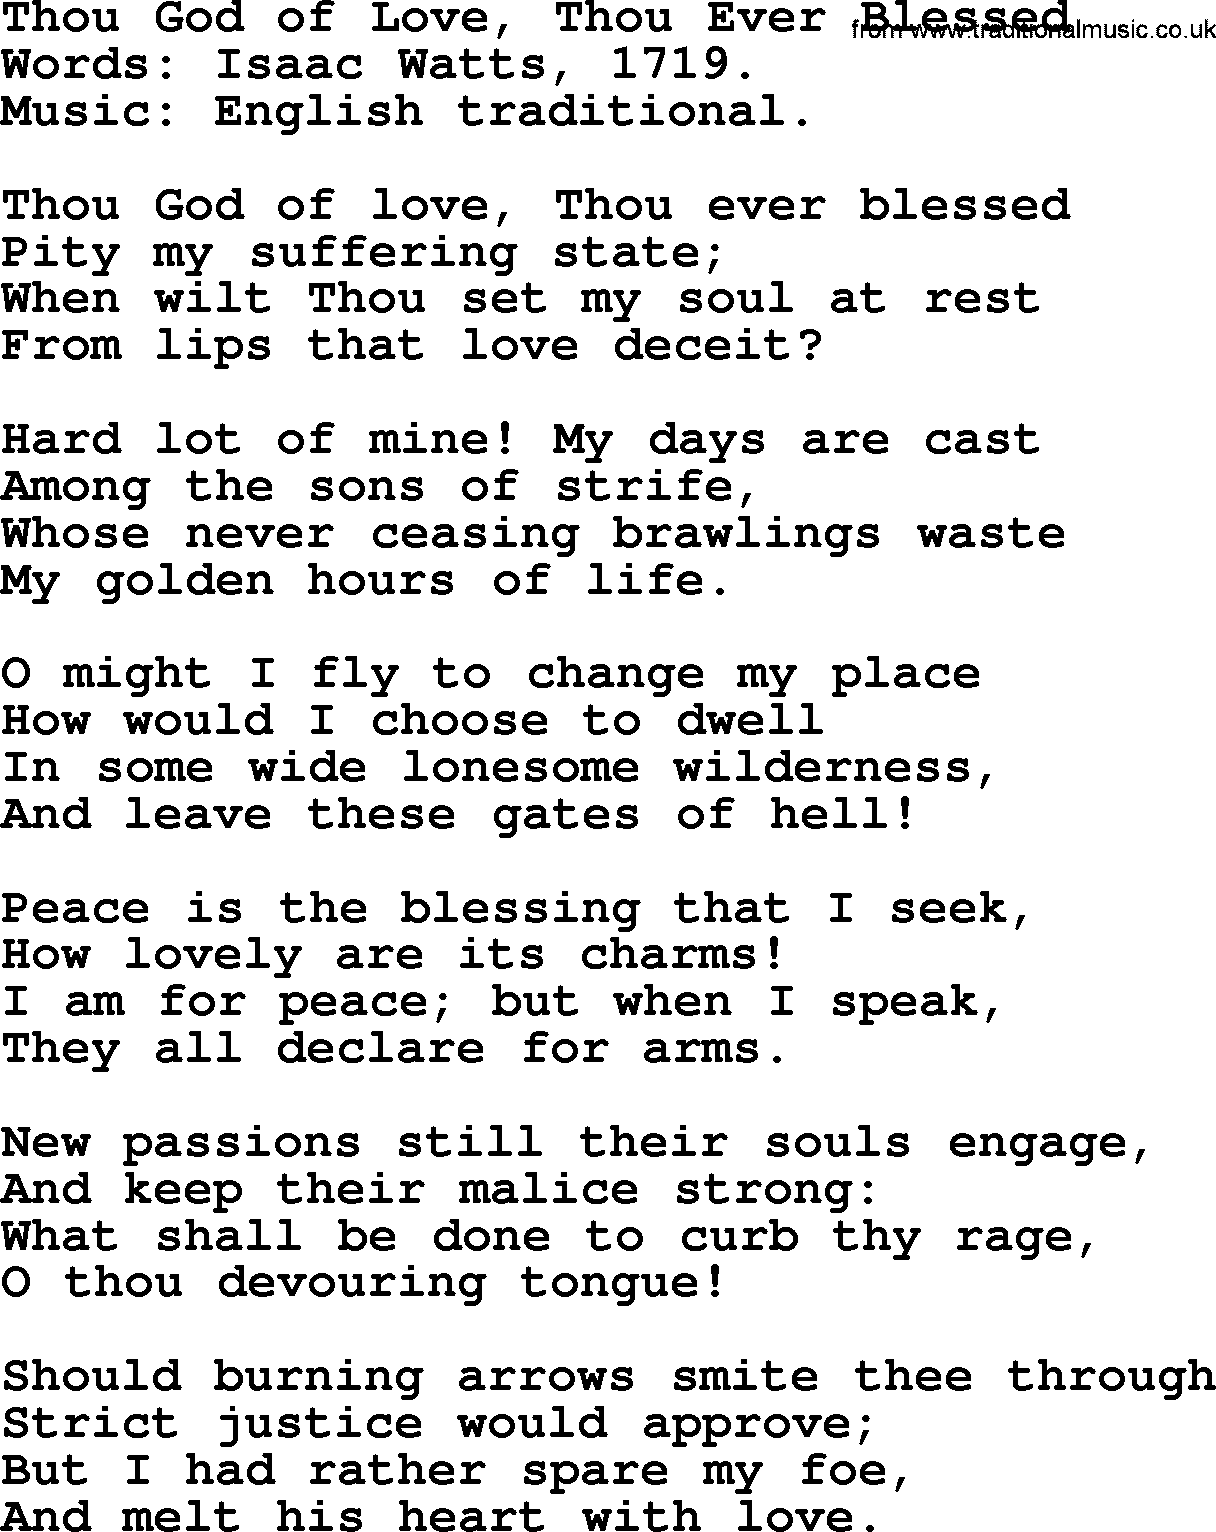 Isaac Watts Christian hymn: Thou God of Love, Thou Ever Blessed- lyricss